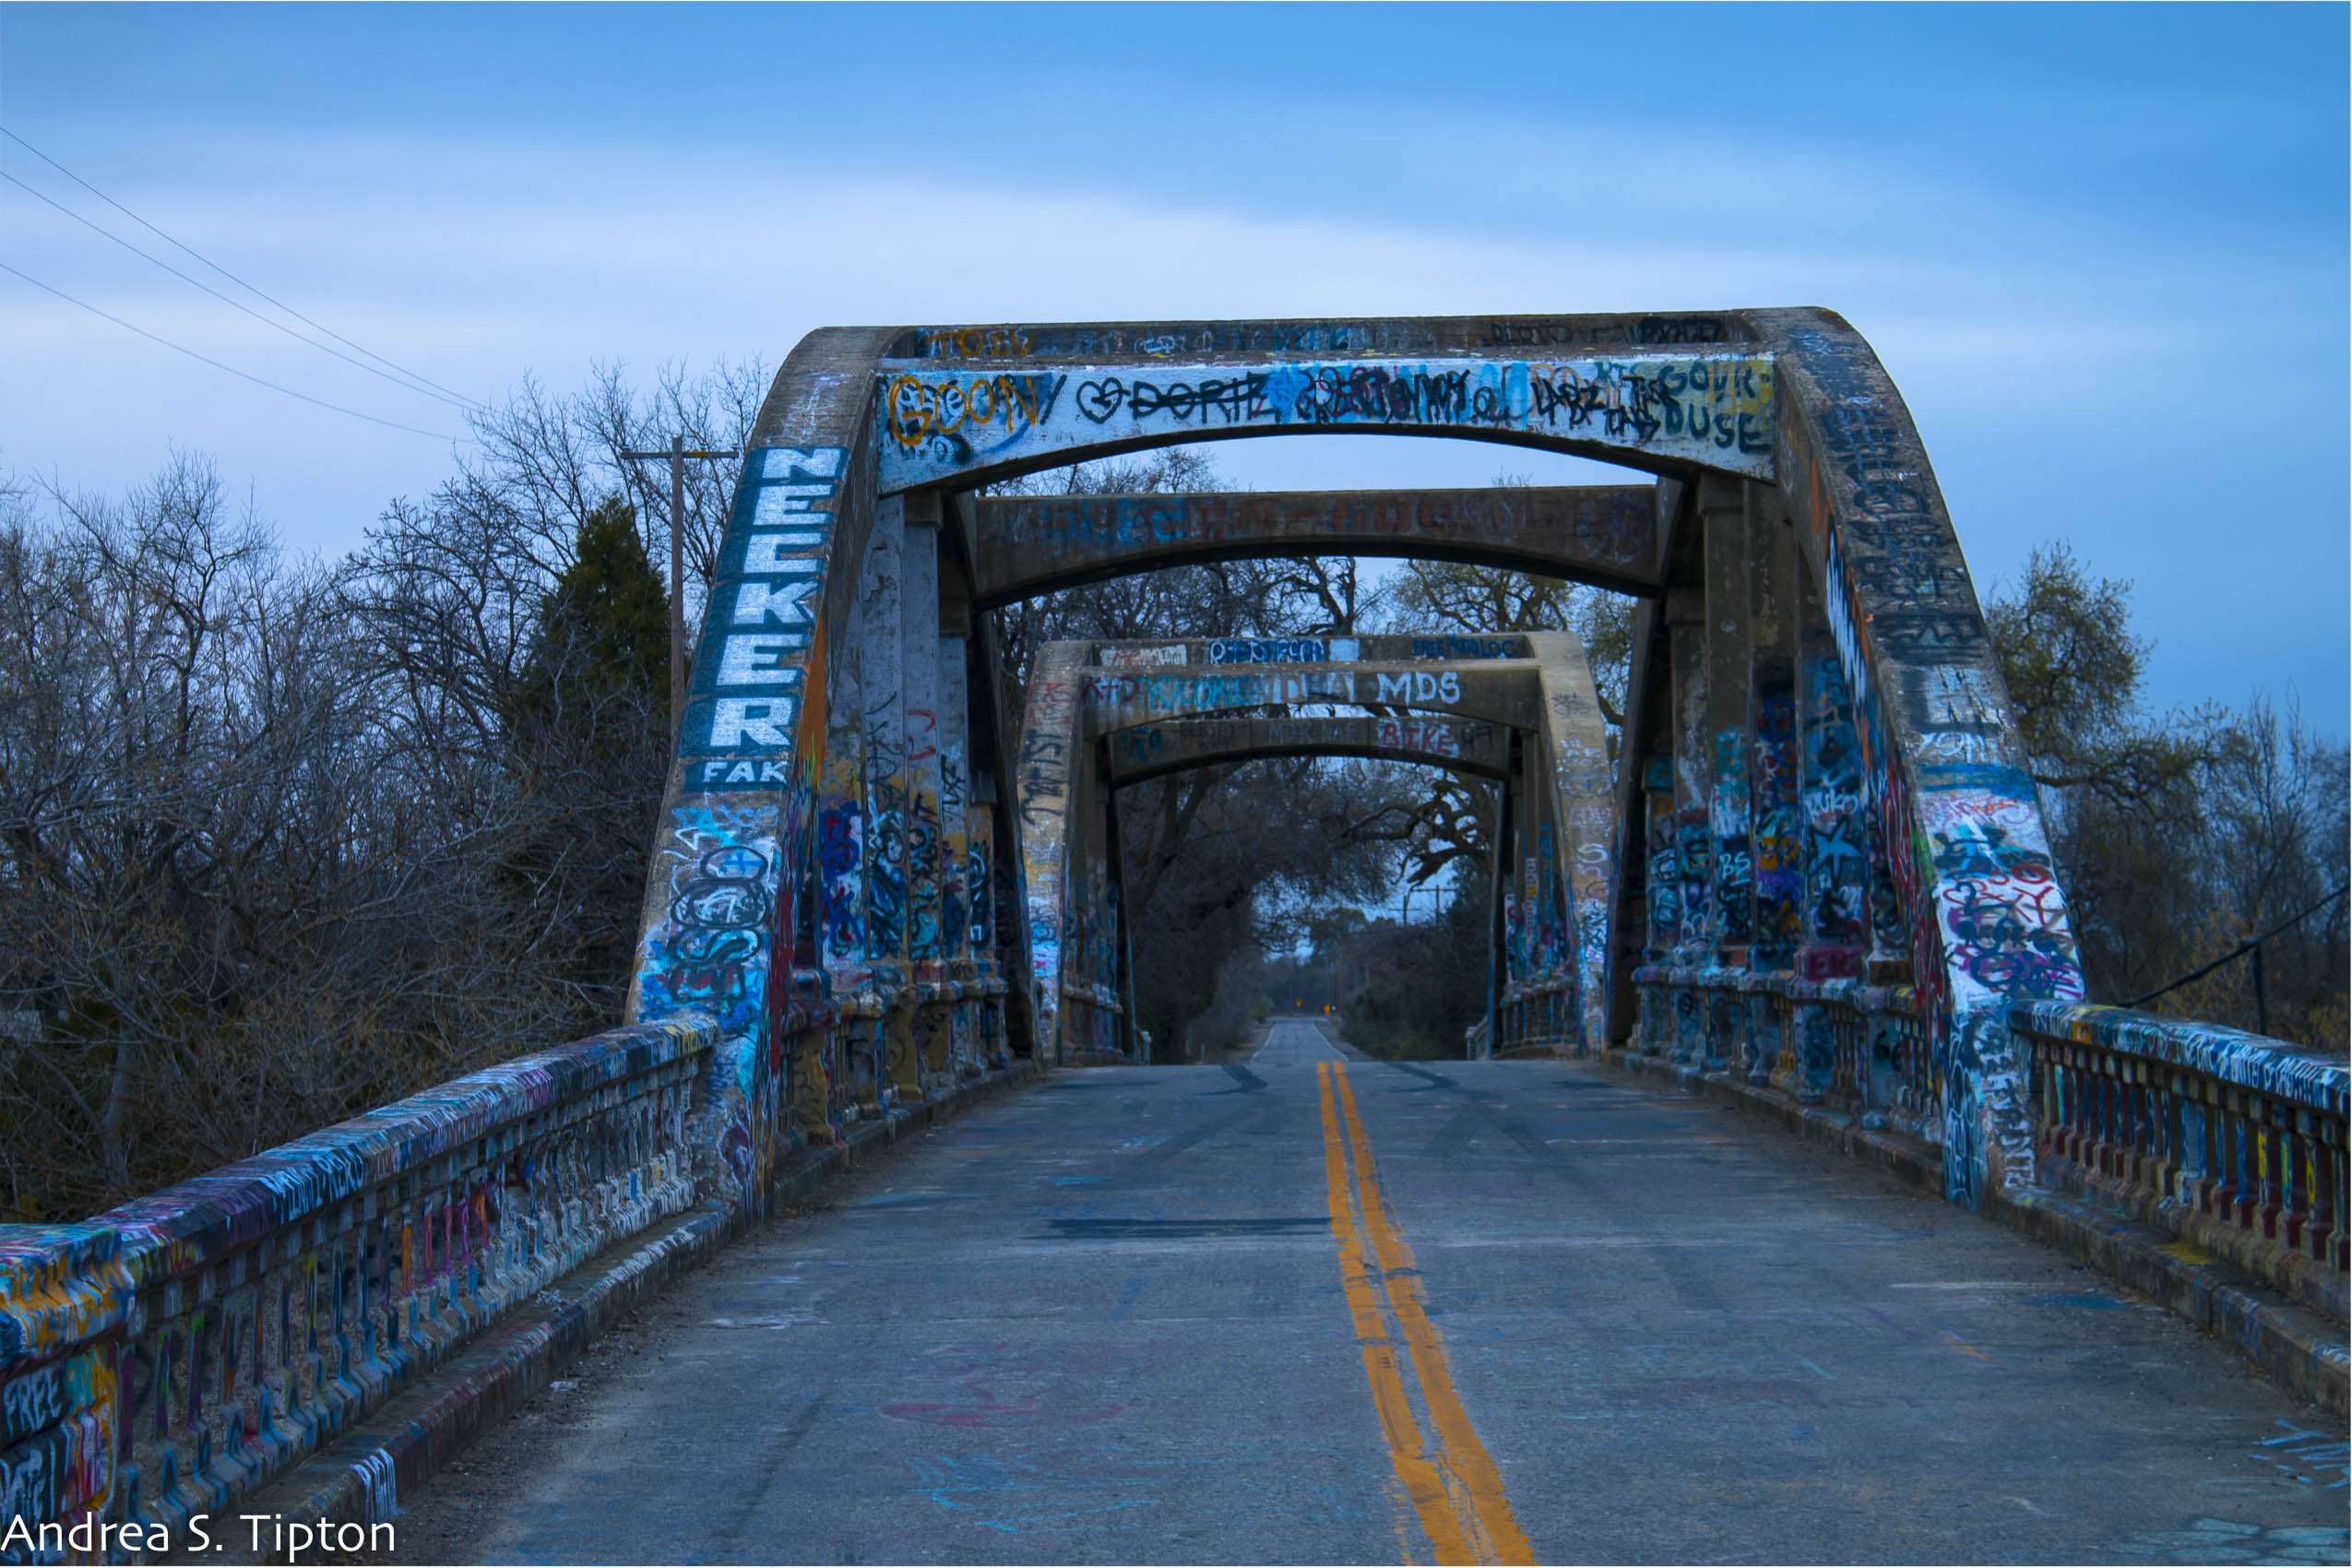 Andrea Tipton - Photography - Stevenson Graffiti Bridge